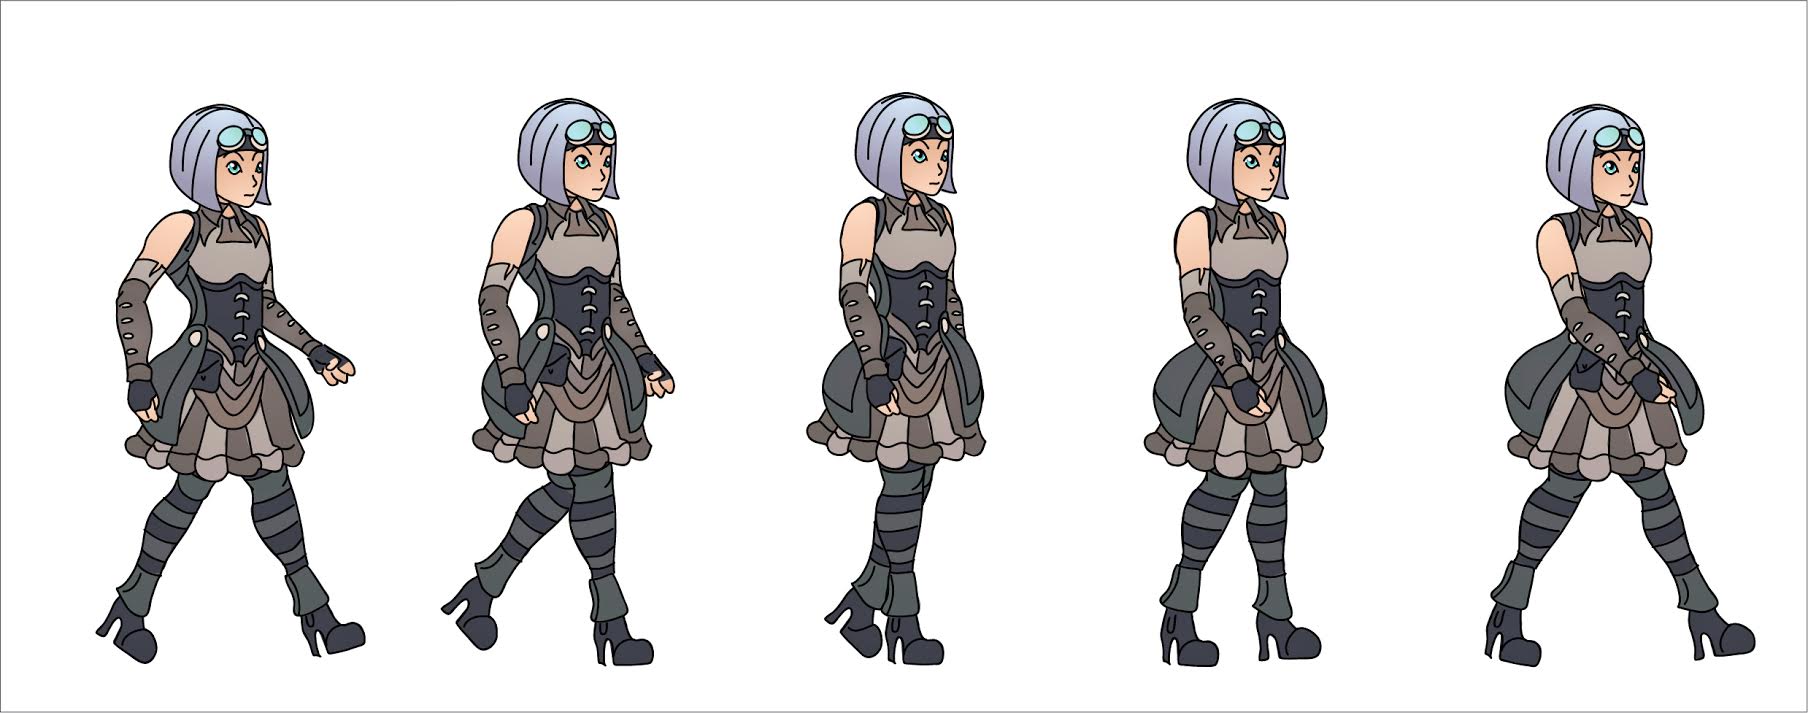 Character Design Steampunk Anime by zeroxfantasy on DeviantArt